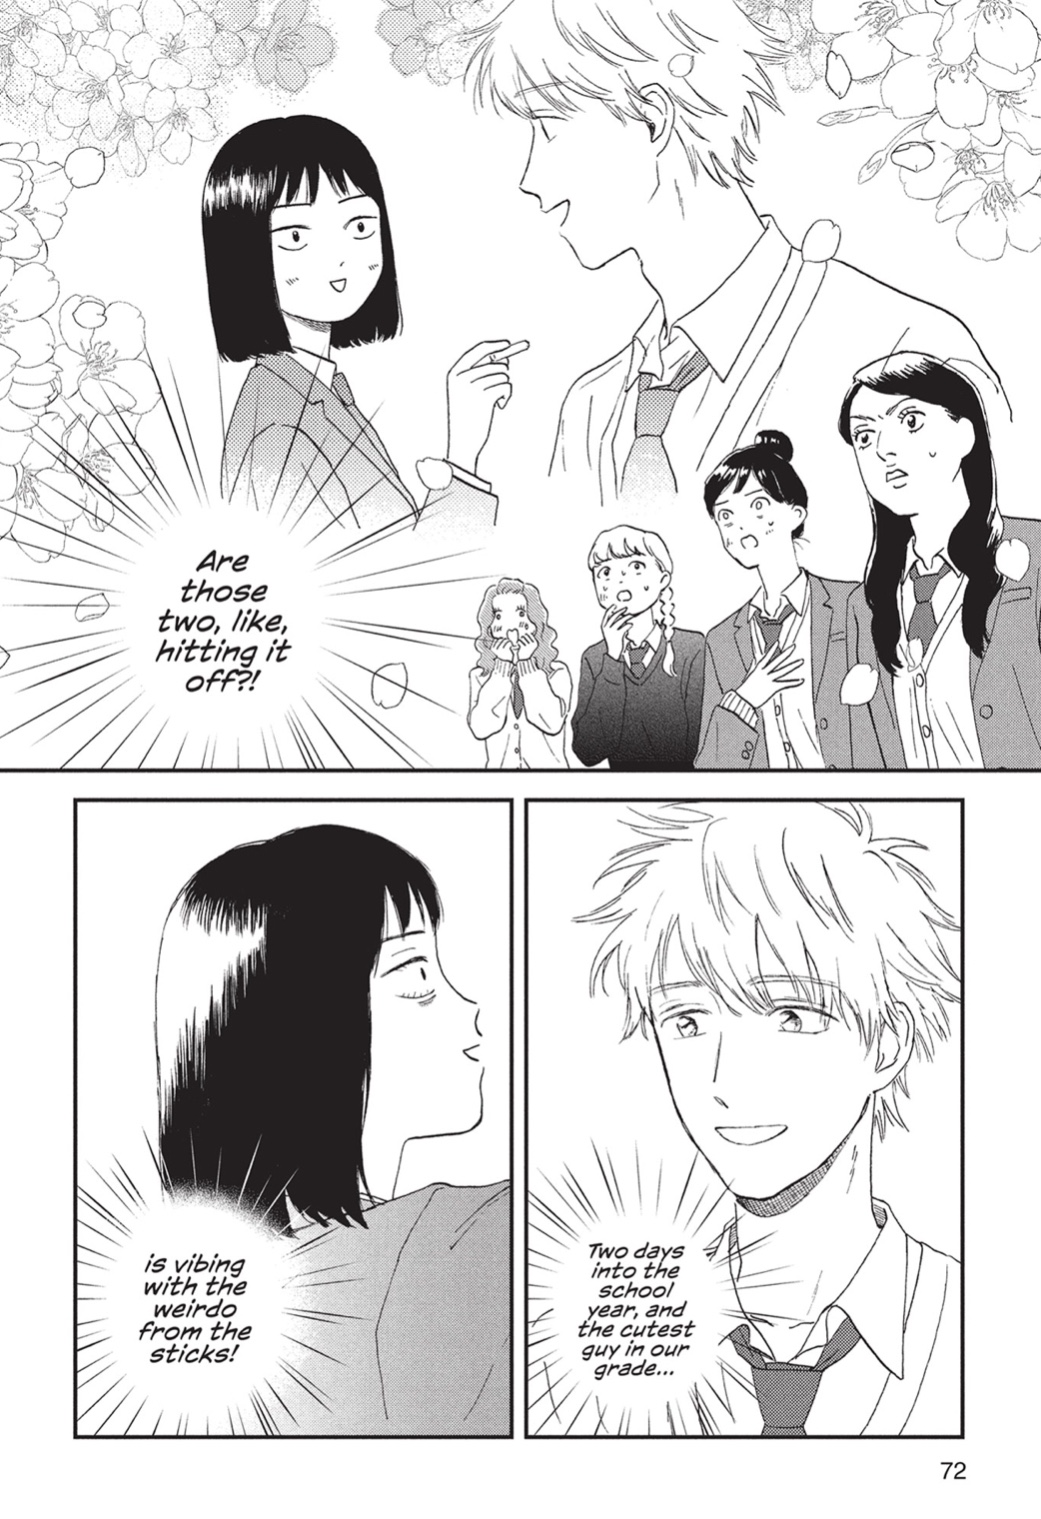 skip to loafer  Anime, Manga, Cute anime couples